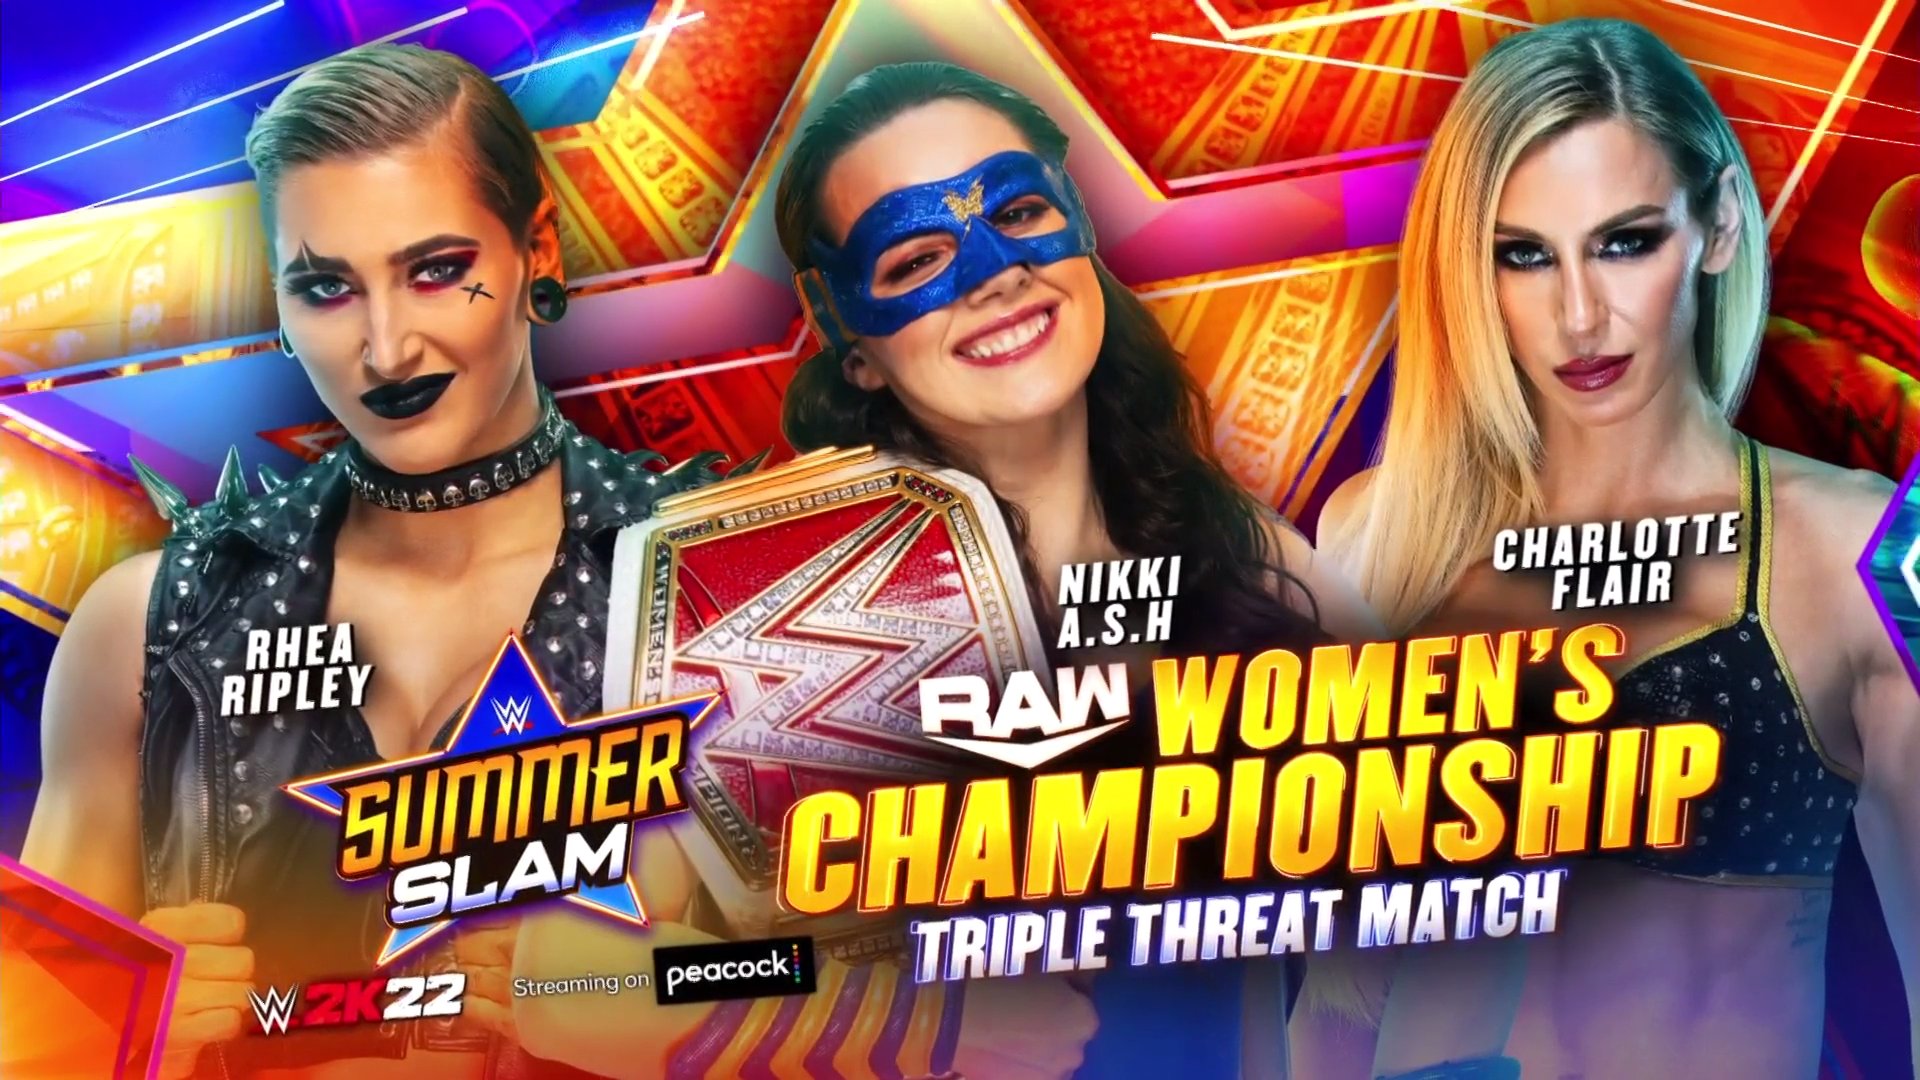 Nikki-A.S.H.-vs.-Charlotte-Flair-y-Rhea-Ripley-en-el-PPV-WWE-SummerSlam-2021-21.08.2021-WWE.jpg